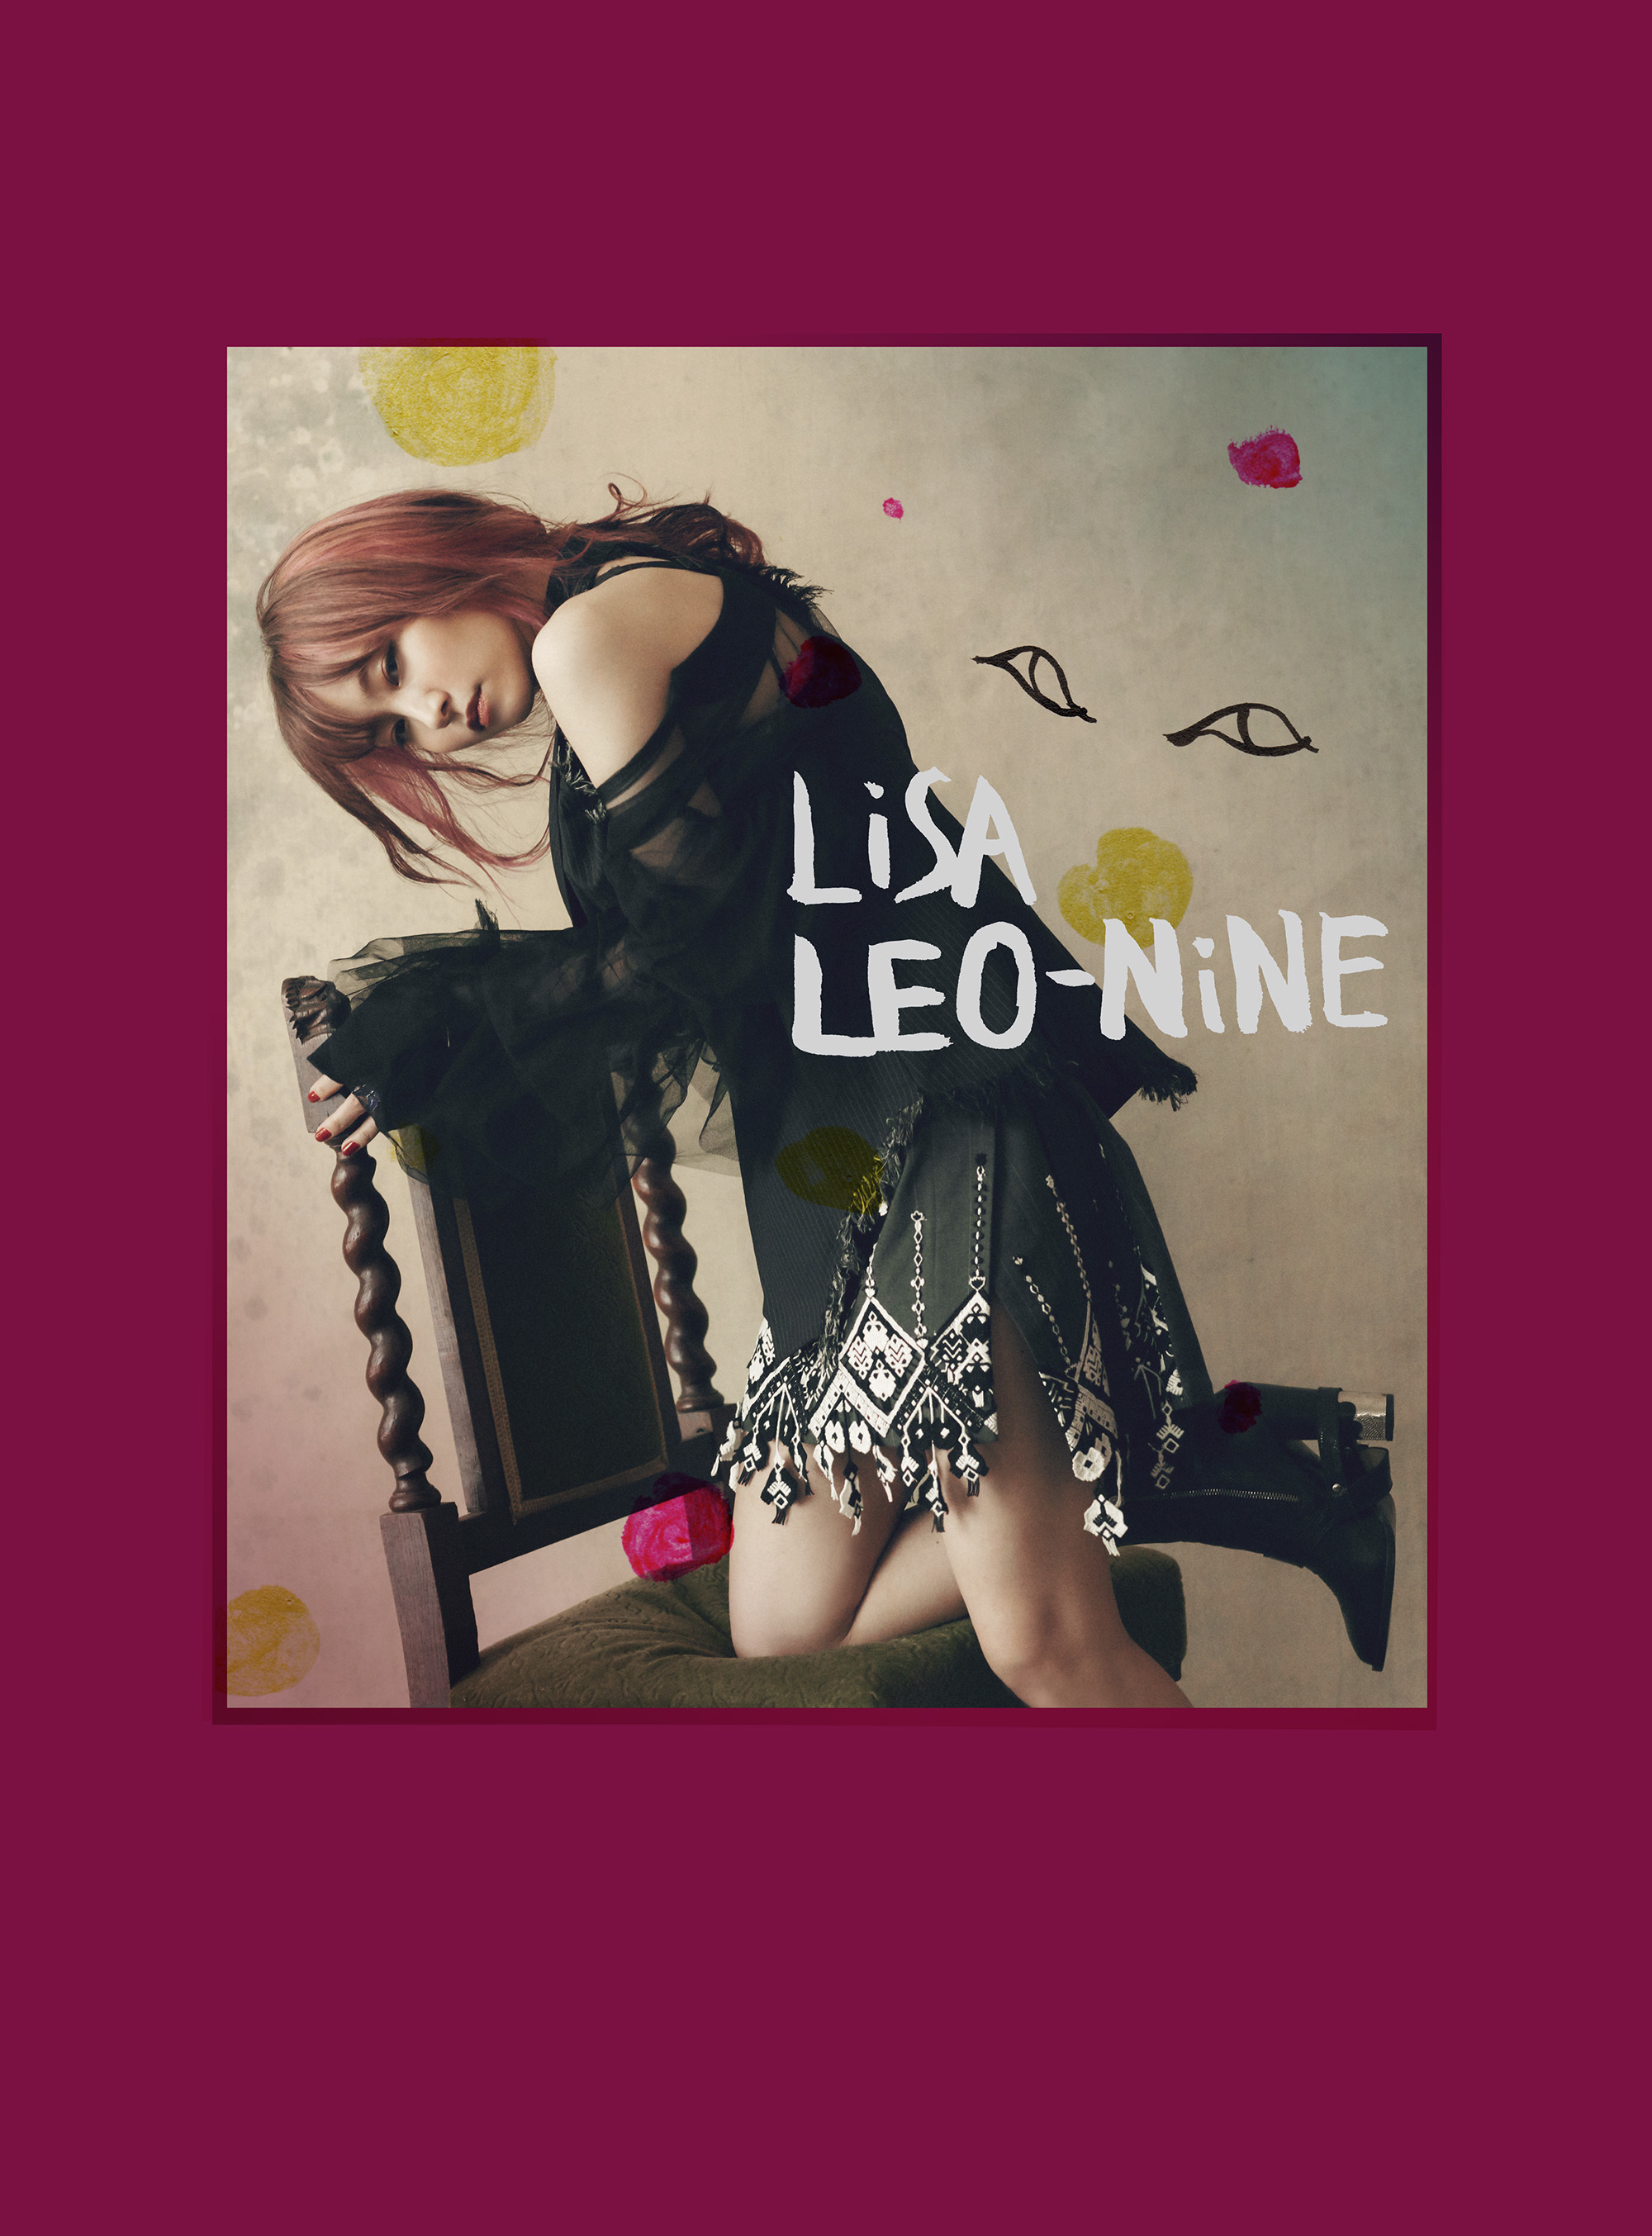 5thアルバム『LEO-NiNE』完全数量生産限定盤